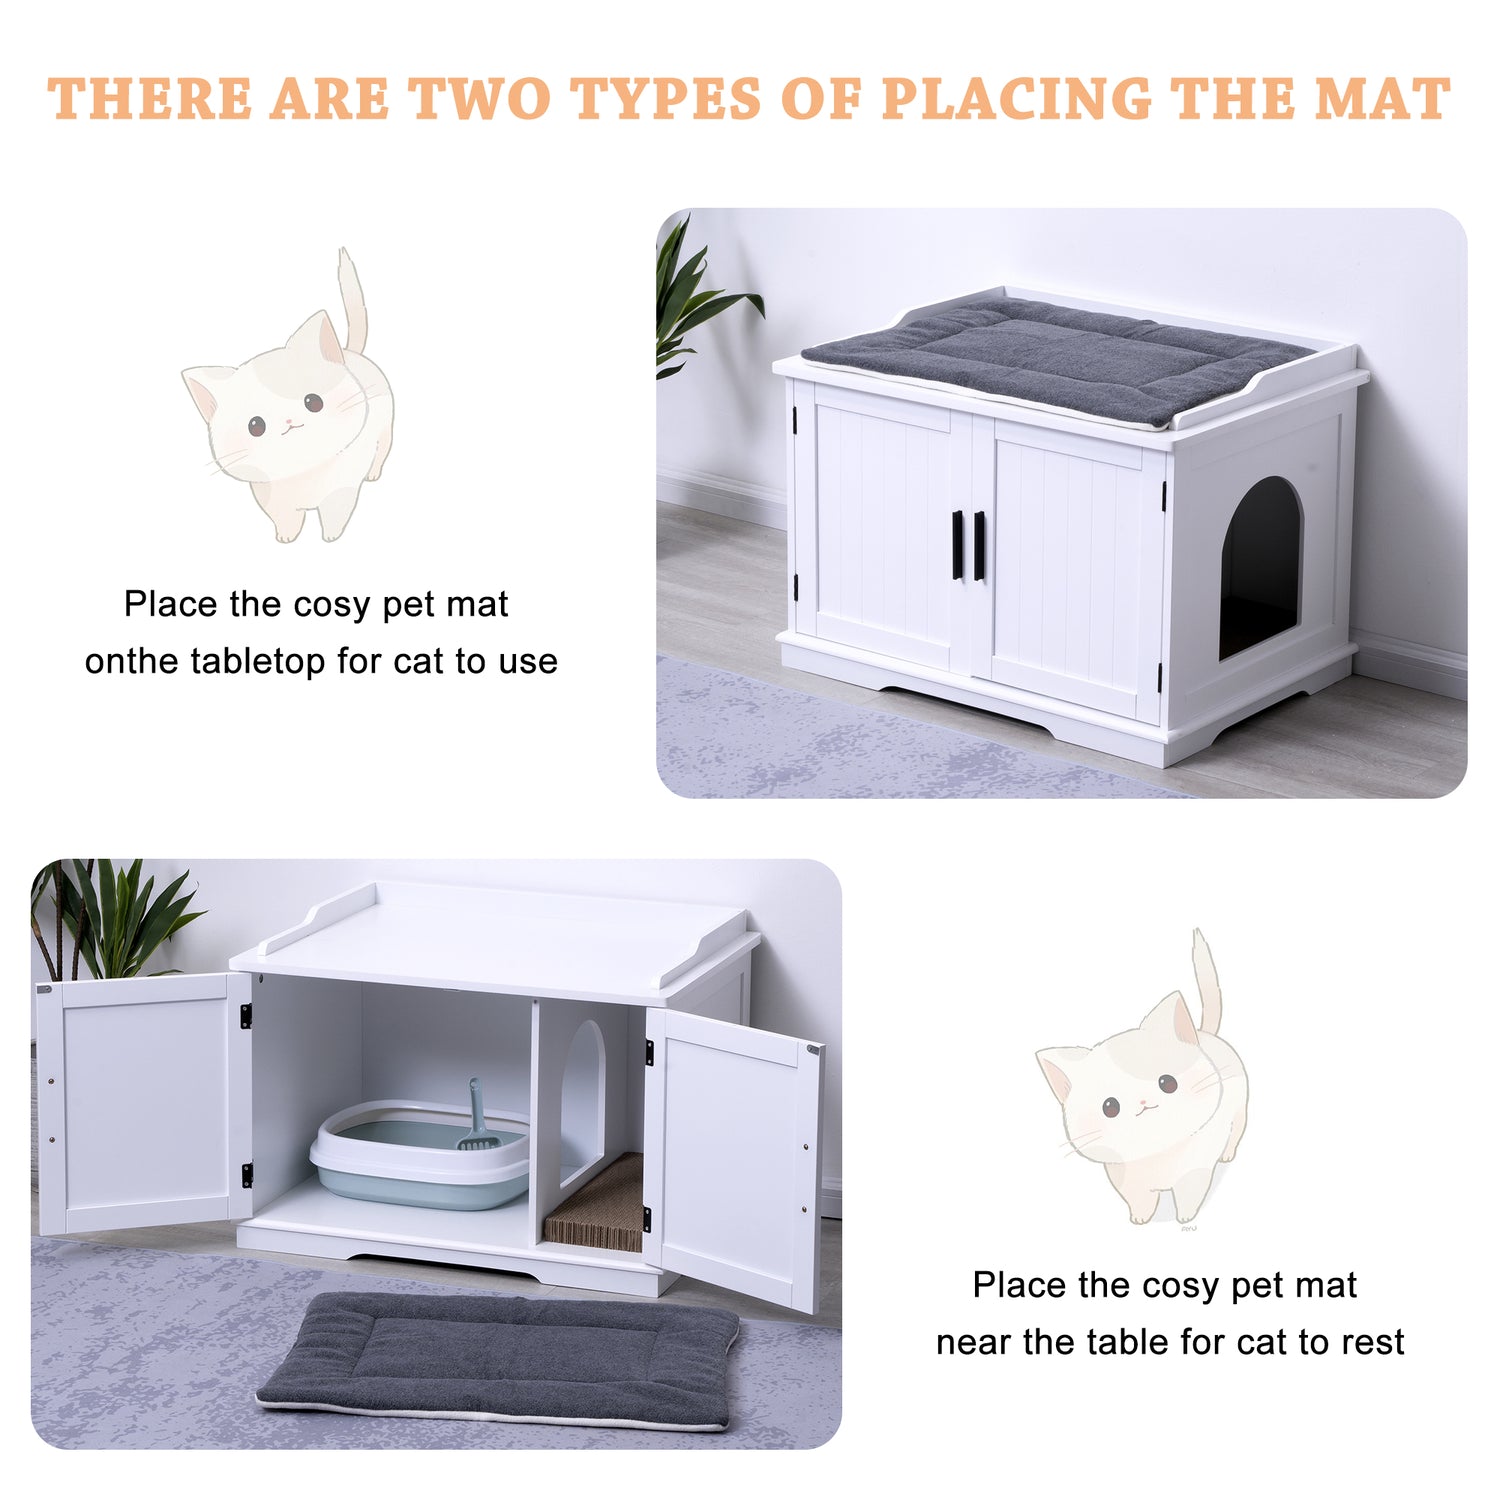 Sunvivi Cat Litter Box Enclosure Wood Hidden Cat Litter Box Furniture White Cat House Side Table,29.1X20.9X20.5 Inches